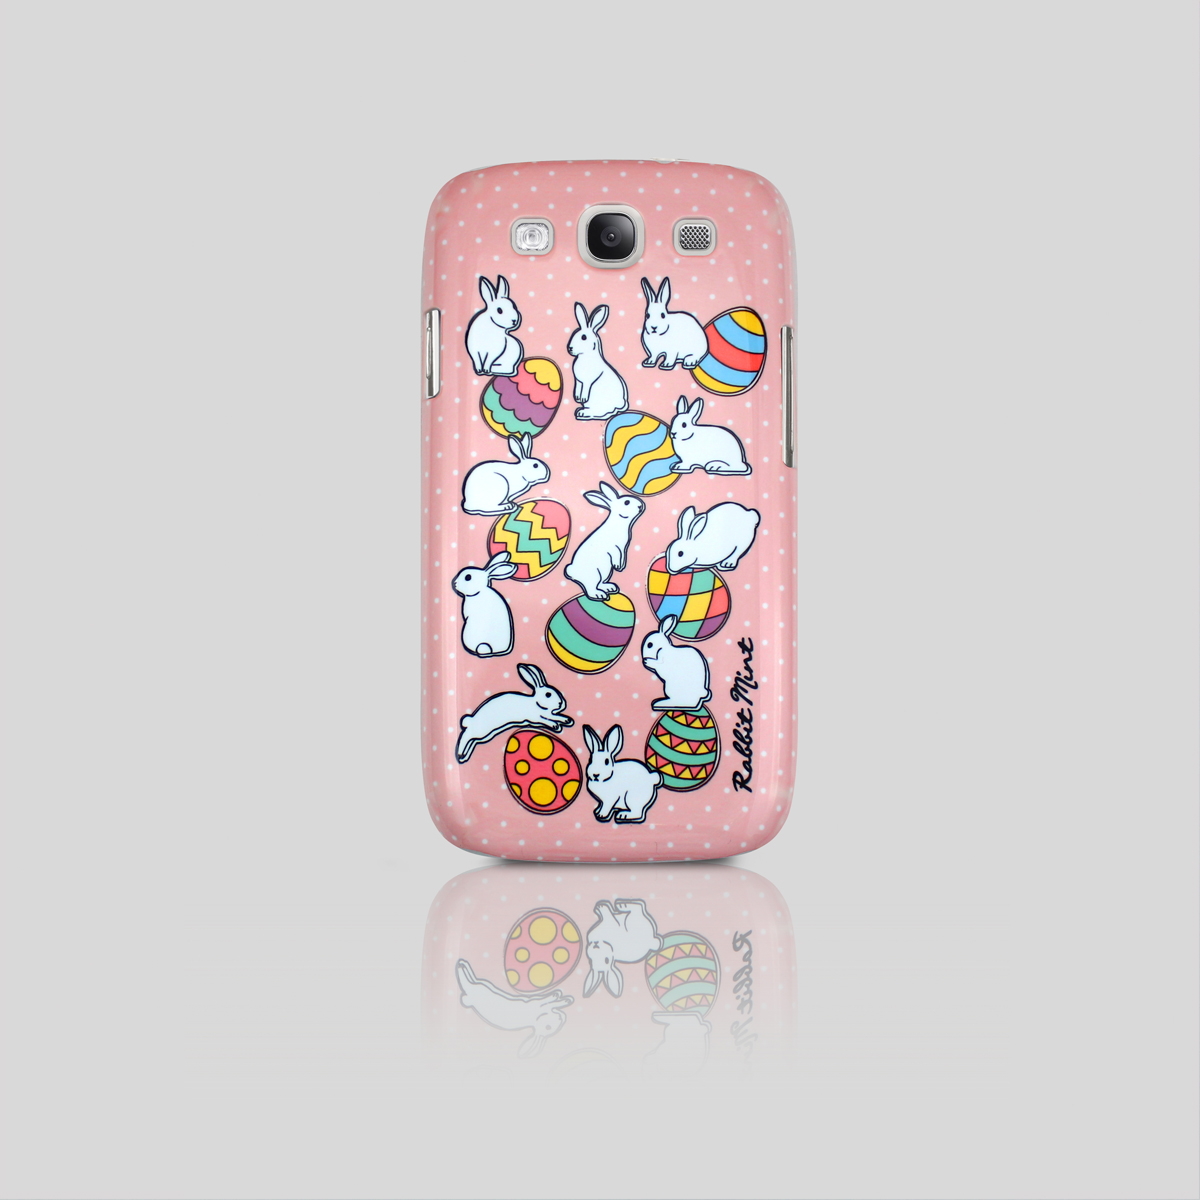 Samsung Galaxy S3 Case - Easter Rabbit - Pink (00062 - S3)